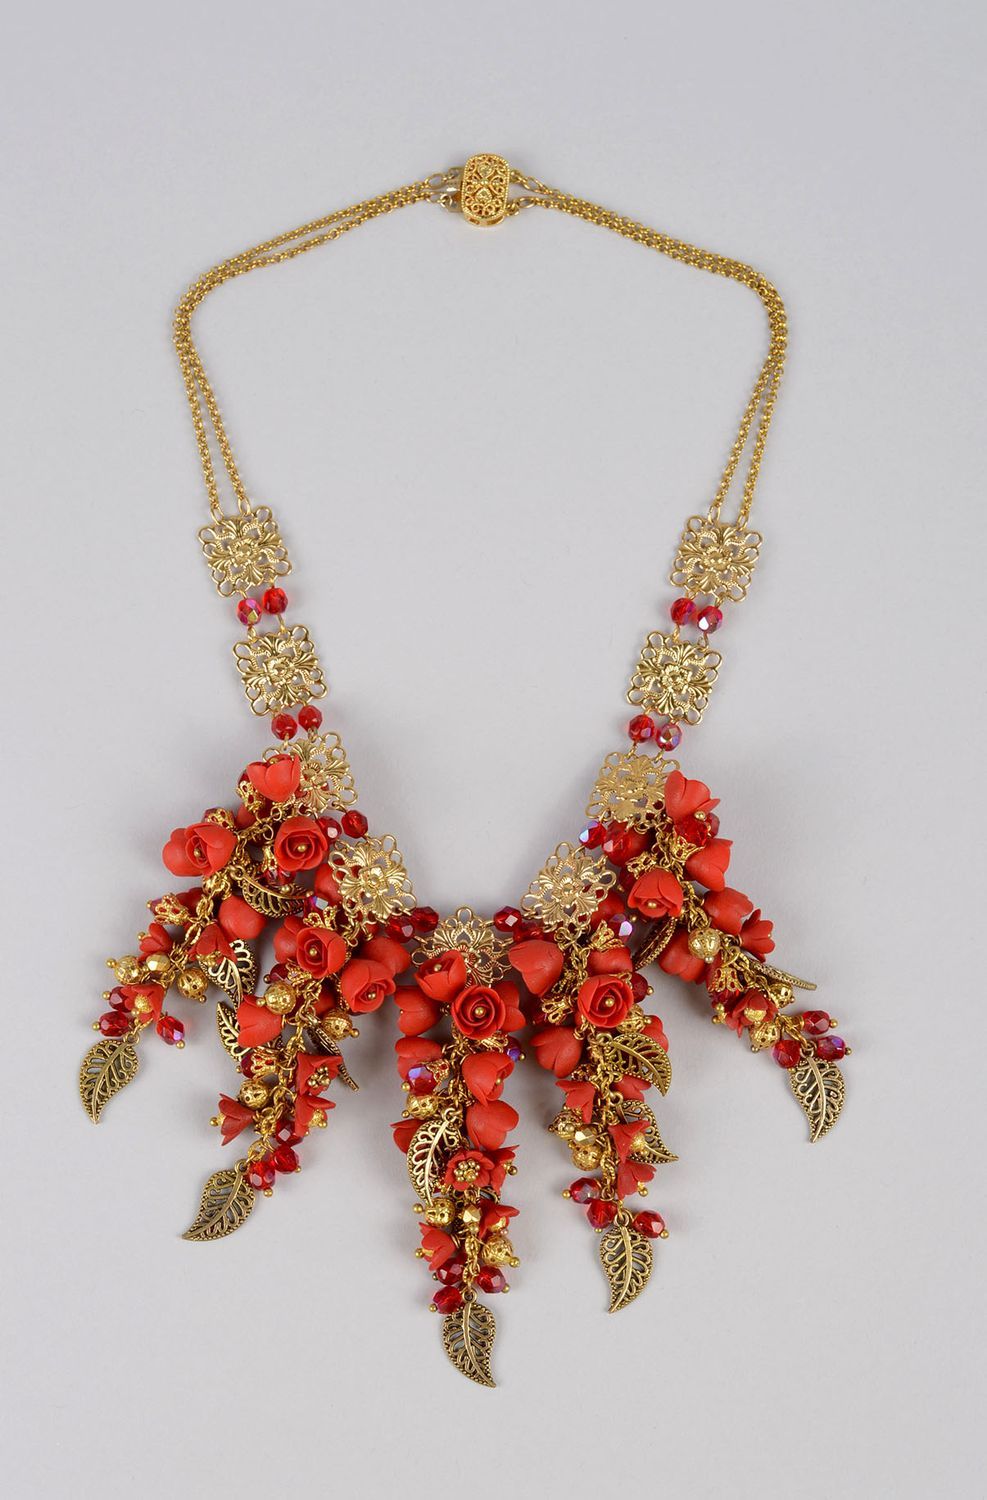 Handmade necklace designer necklace unusual gift clay jewelry designer accessory photo 1